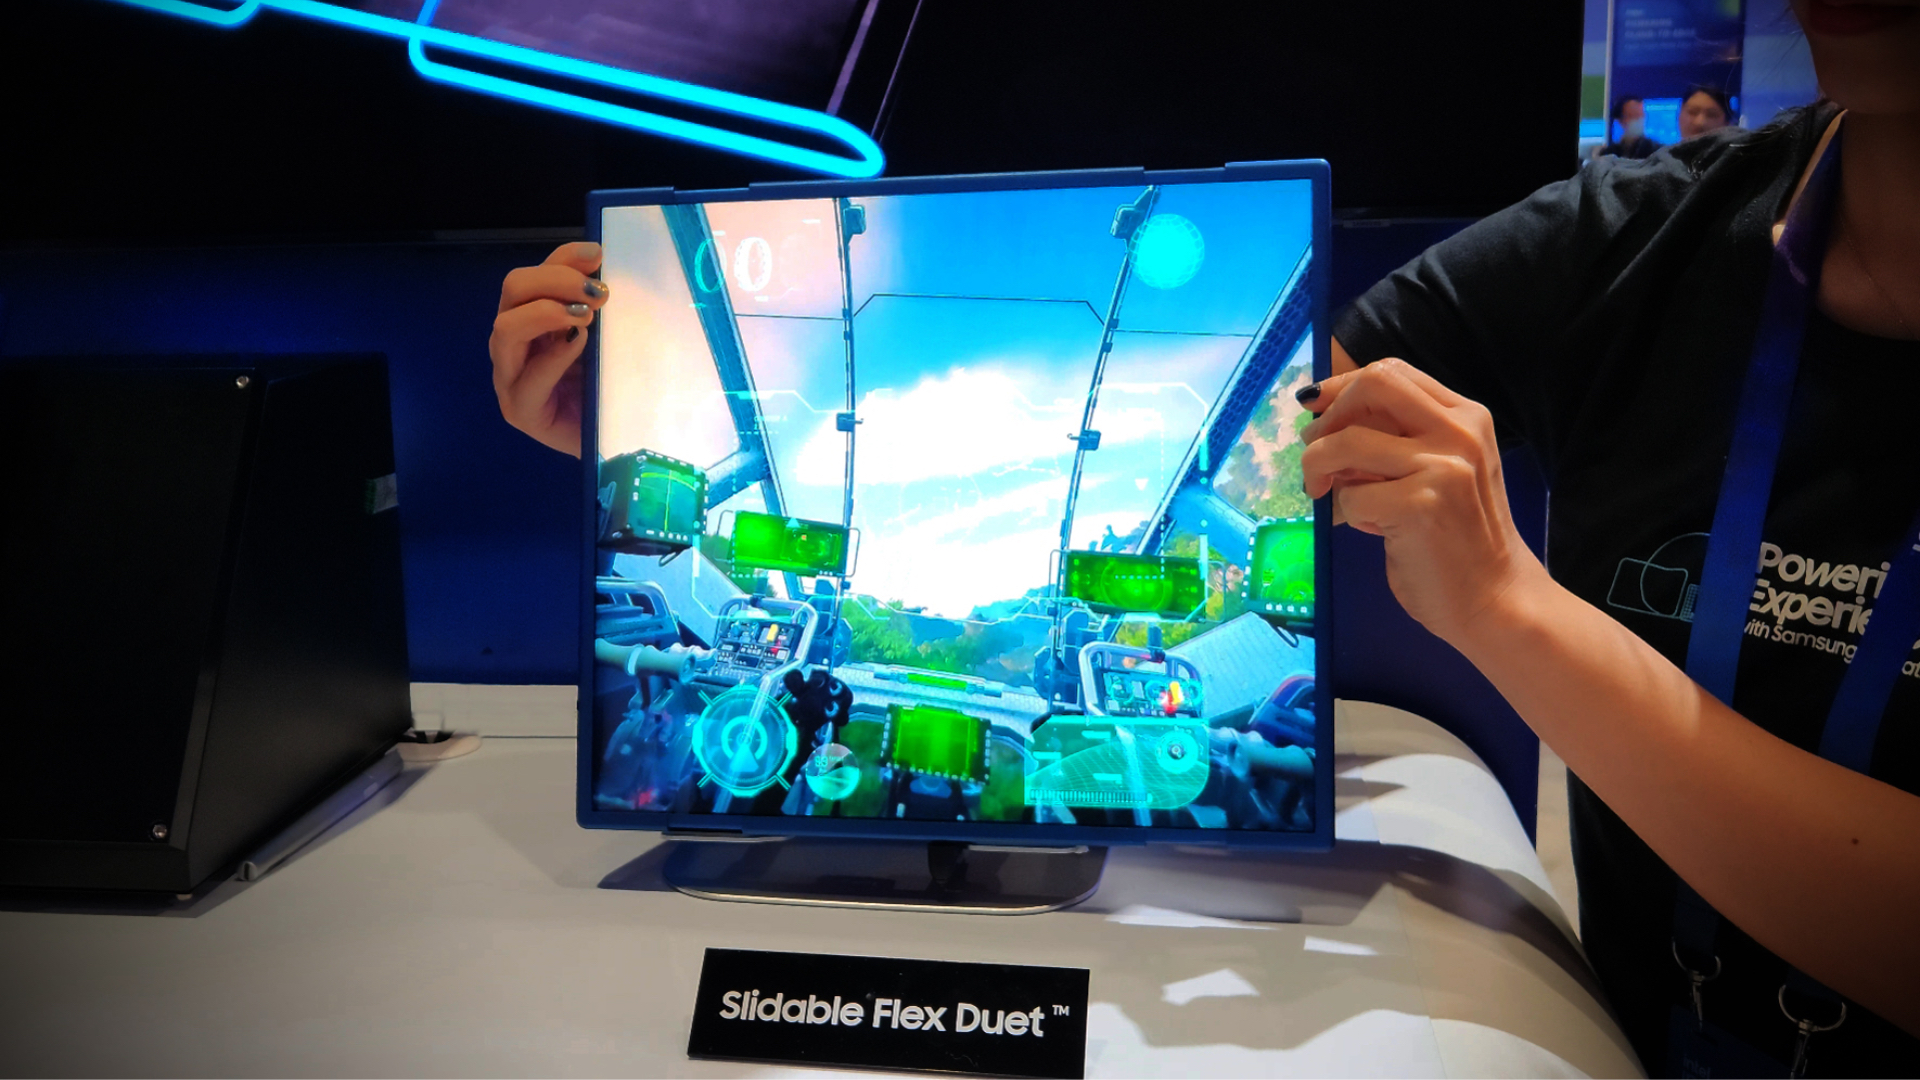 Samsung Sliding Flex Duet OLED display